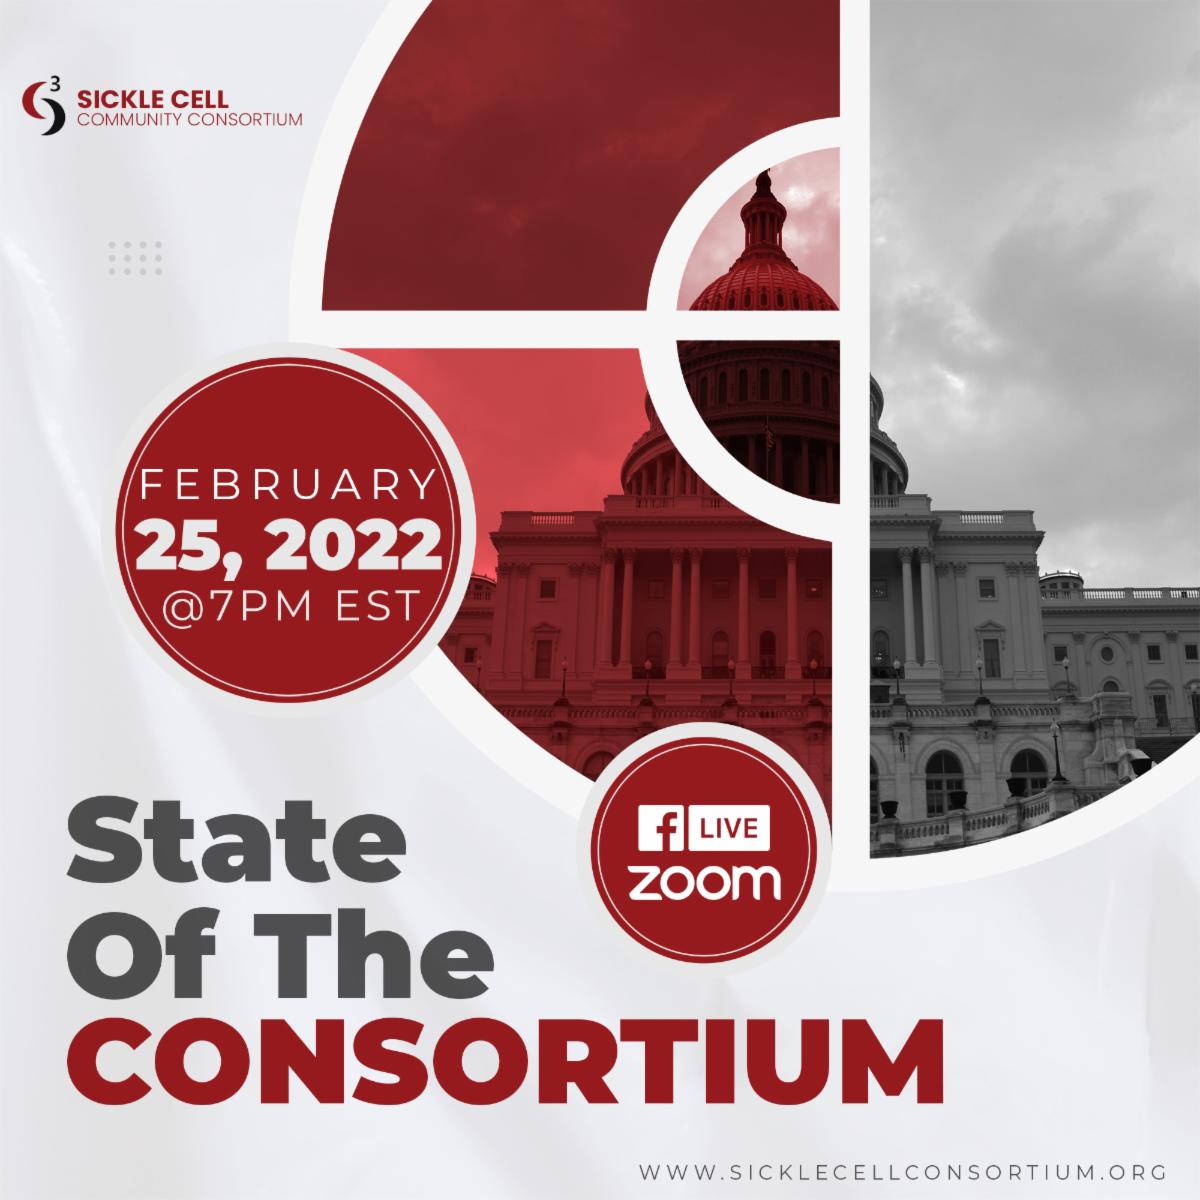 State Of The CONSORTIUM – Sickle Cell Community Consortium 